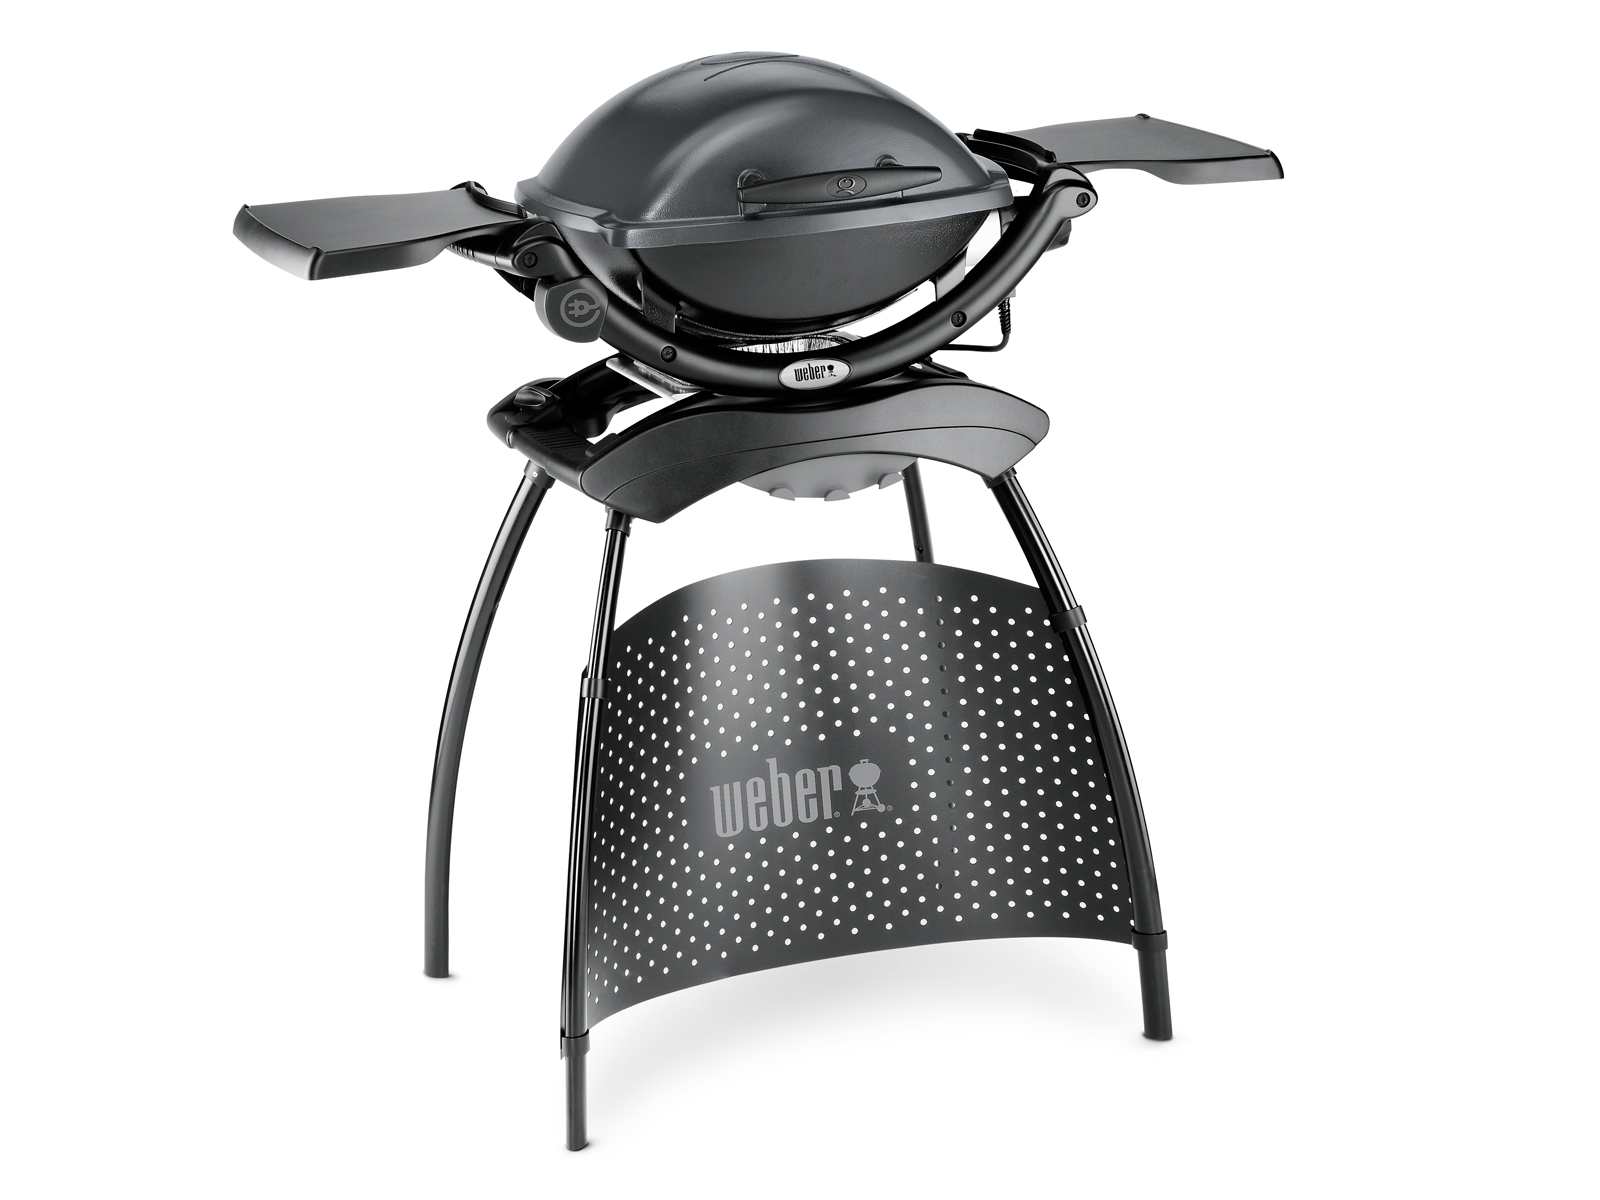 Weber barbecue Q1400 stand - Dark grey